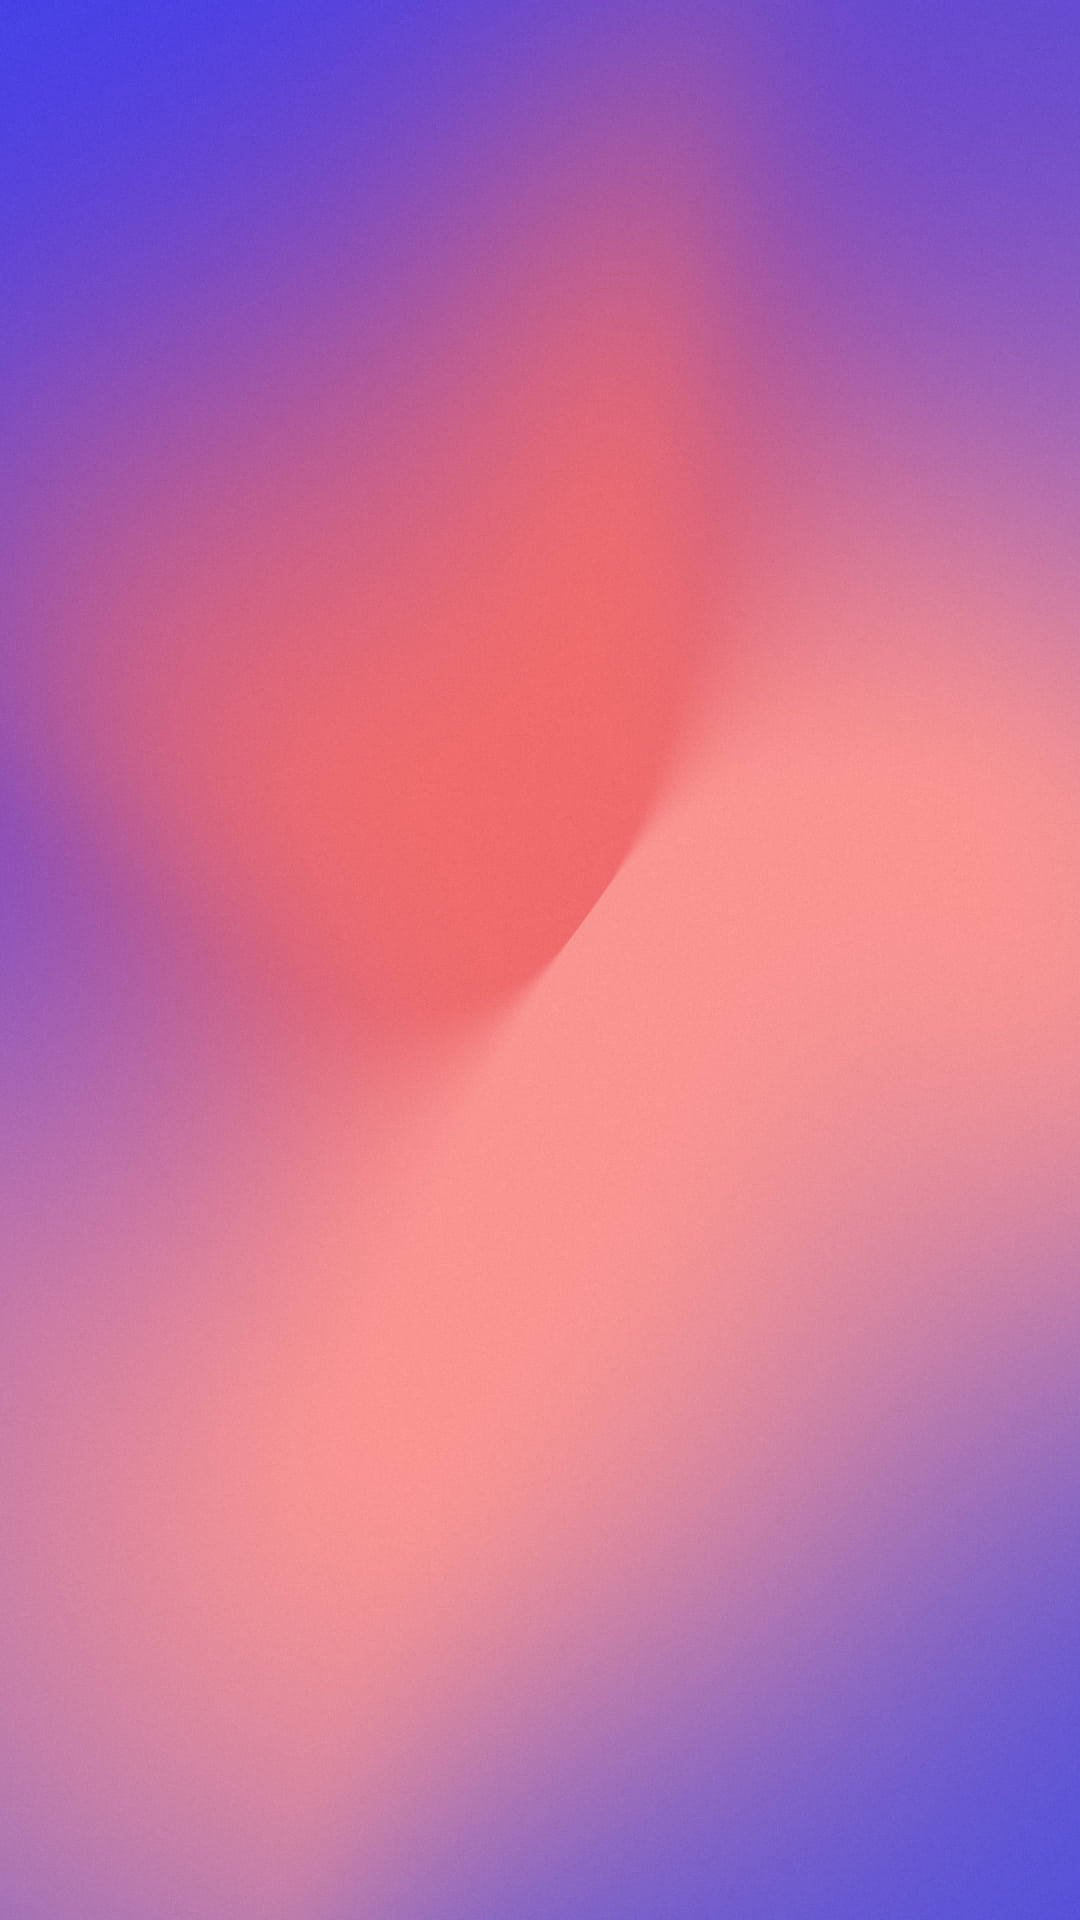 Pixel 3 Xl Gradient Pink And Purple Wallpaper